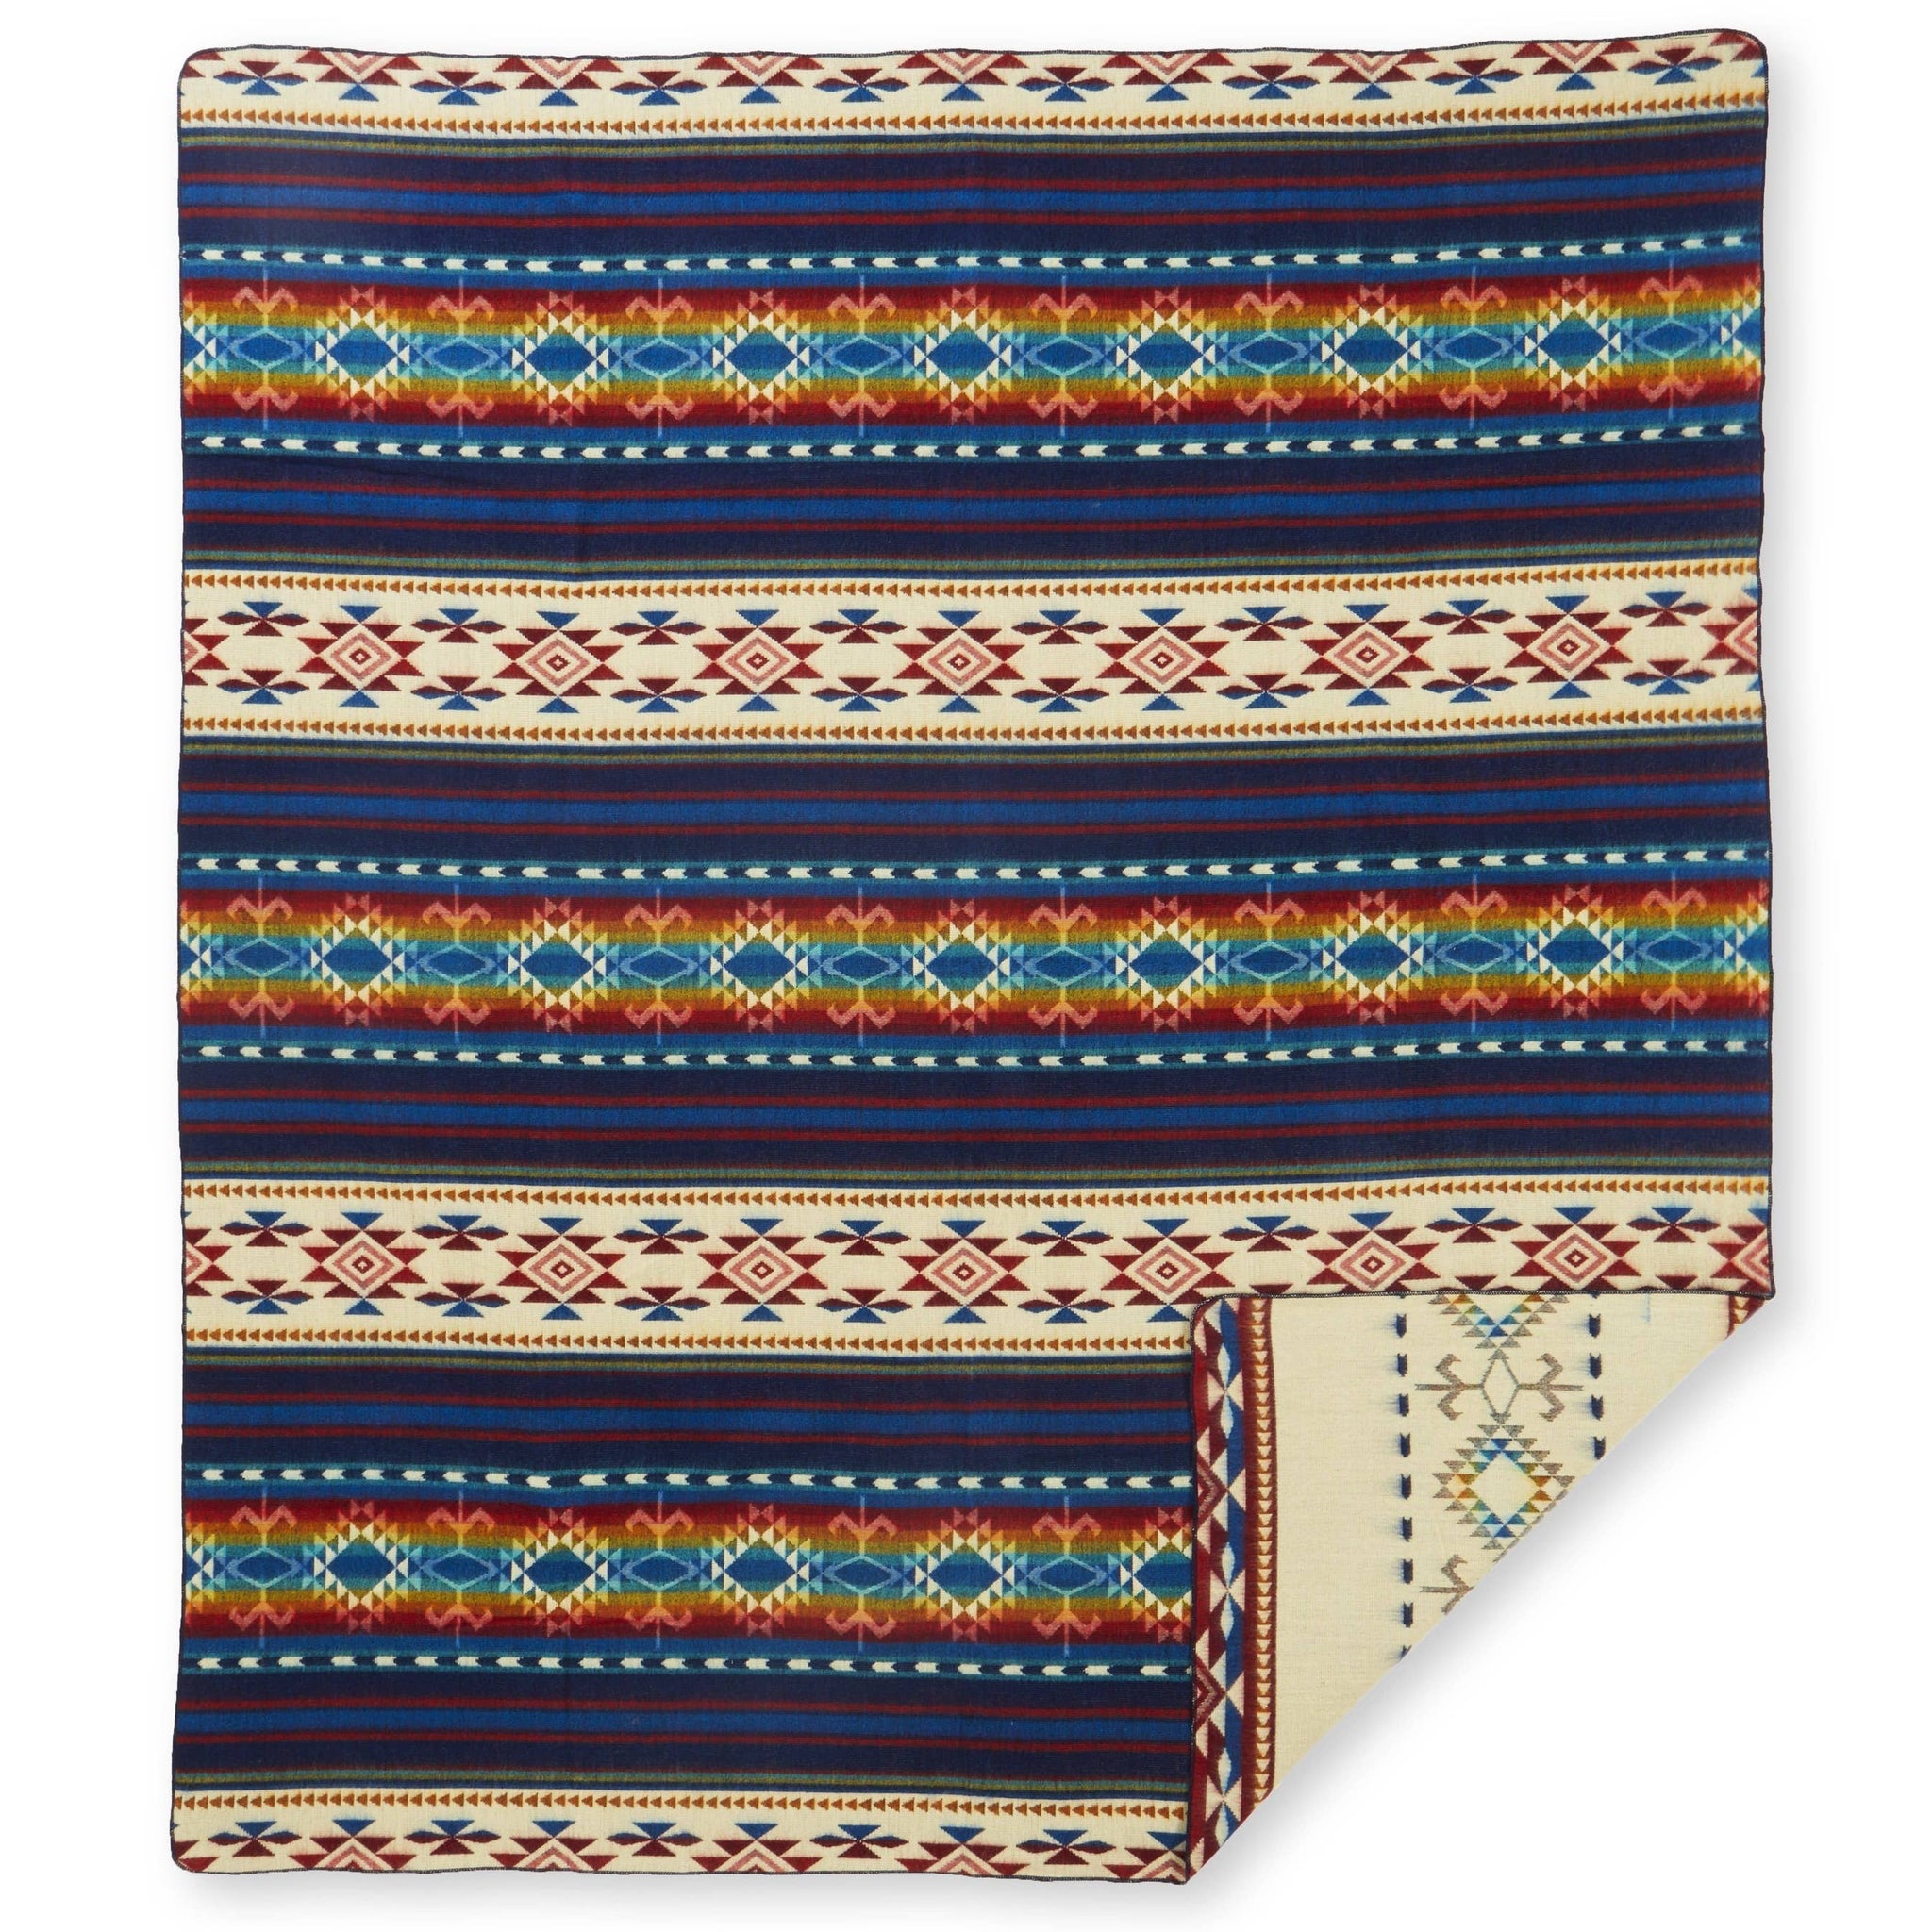 Cotacachi Water

Ecuadane Blanket Boho Tribal Queen